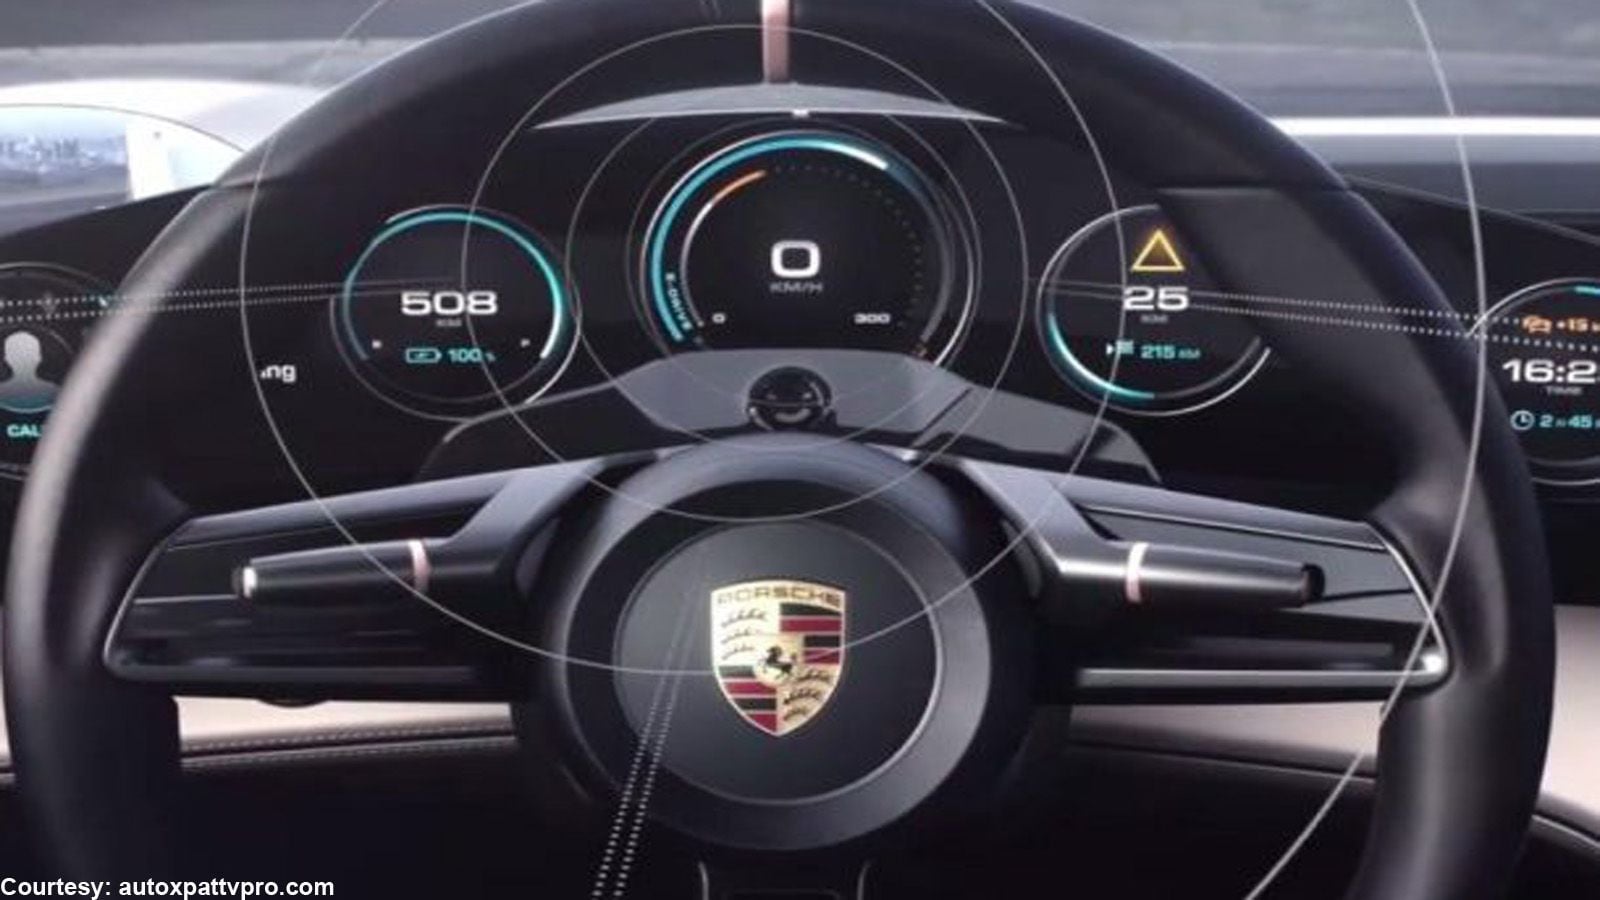 6 Futuristic Features of the Porsche Mission E Sports Car